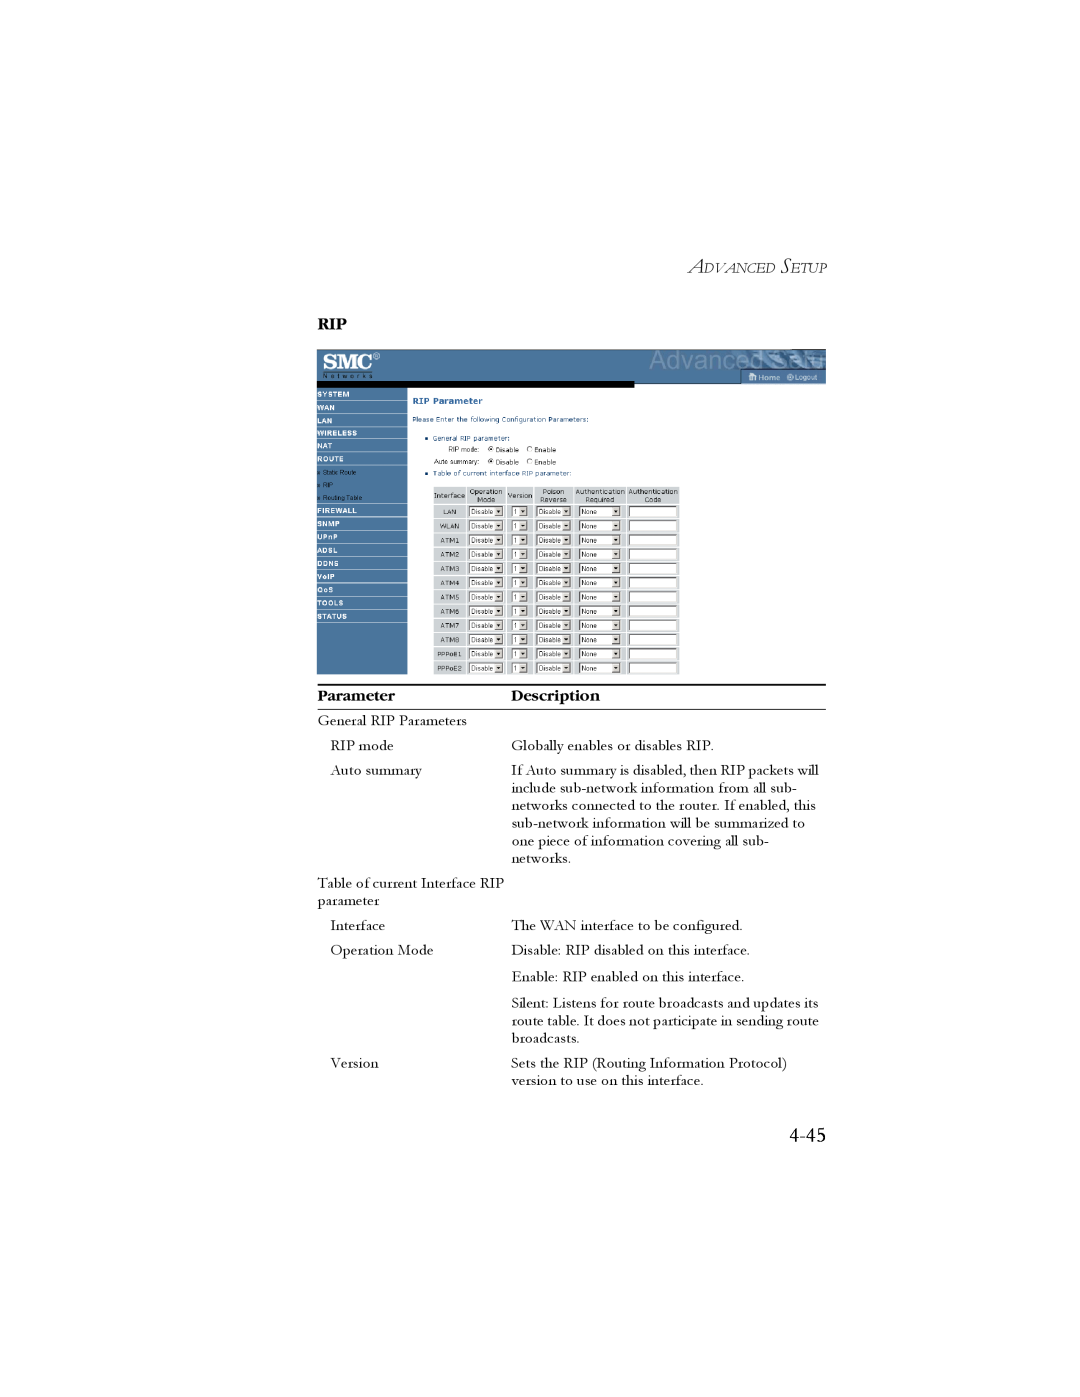 SMC Networks SMC7908VoWBRA manual 4-45, Parameter, Description 